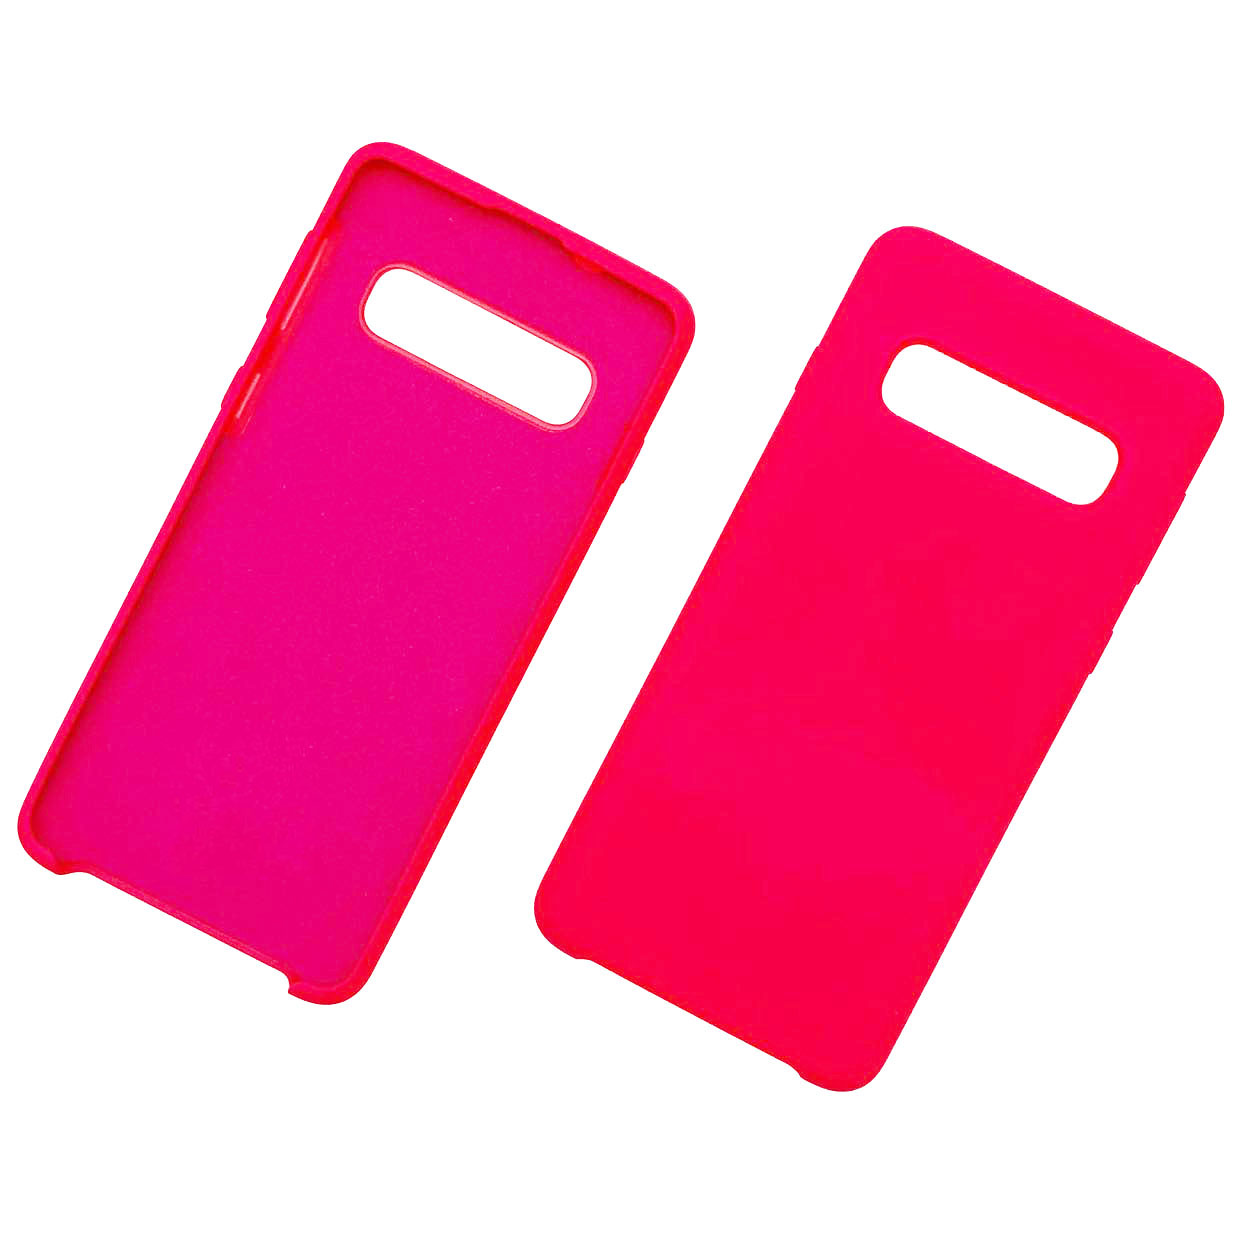 Чехол накладка Silicon Cover для SAMSUNG Galaxy S10 Plus (SM-G975), силикон, бархат, цвет ярко розовый.